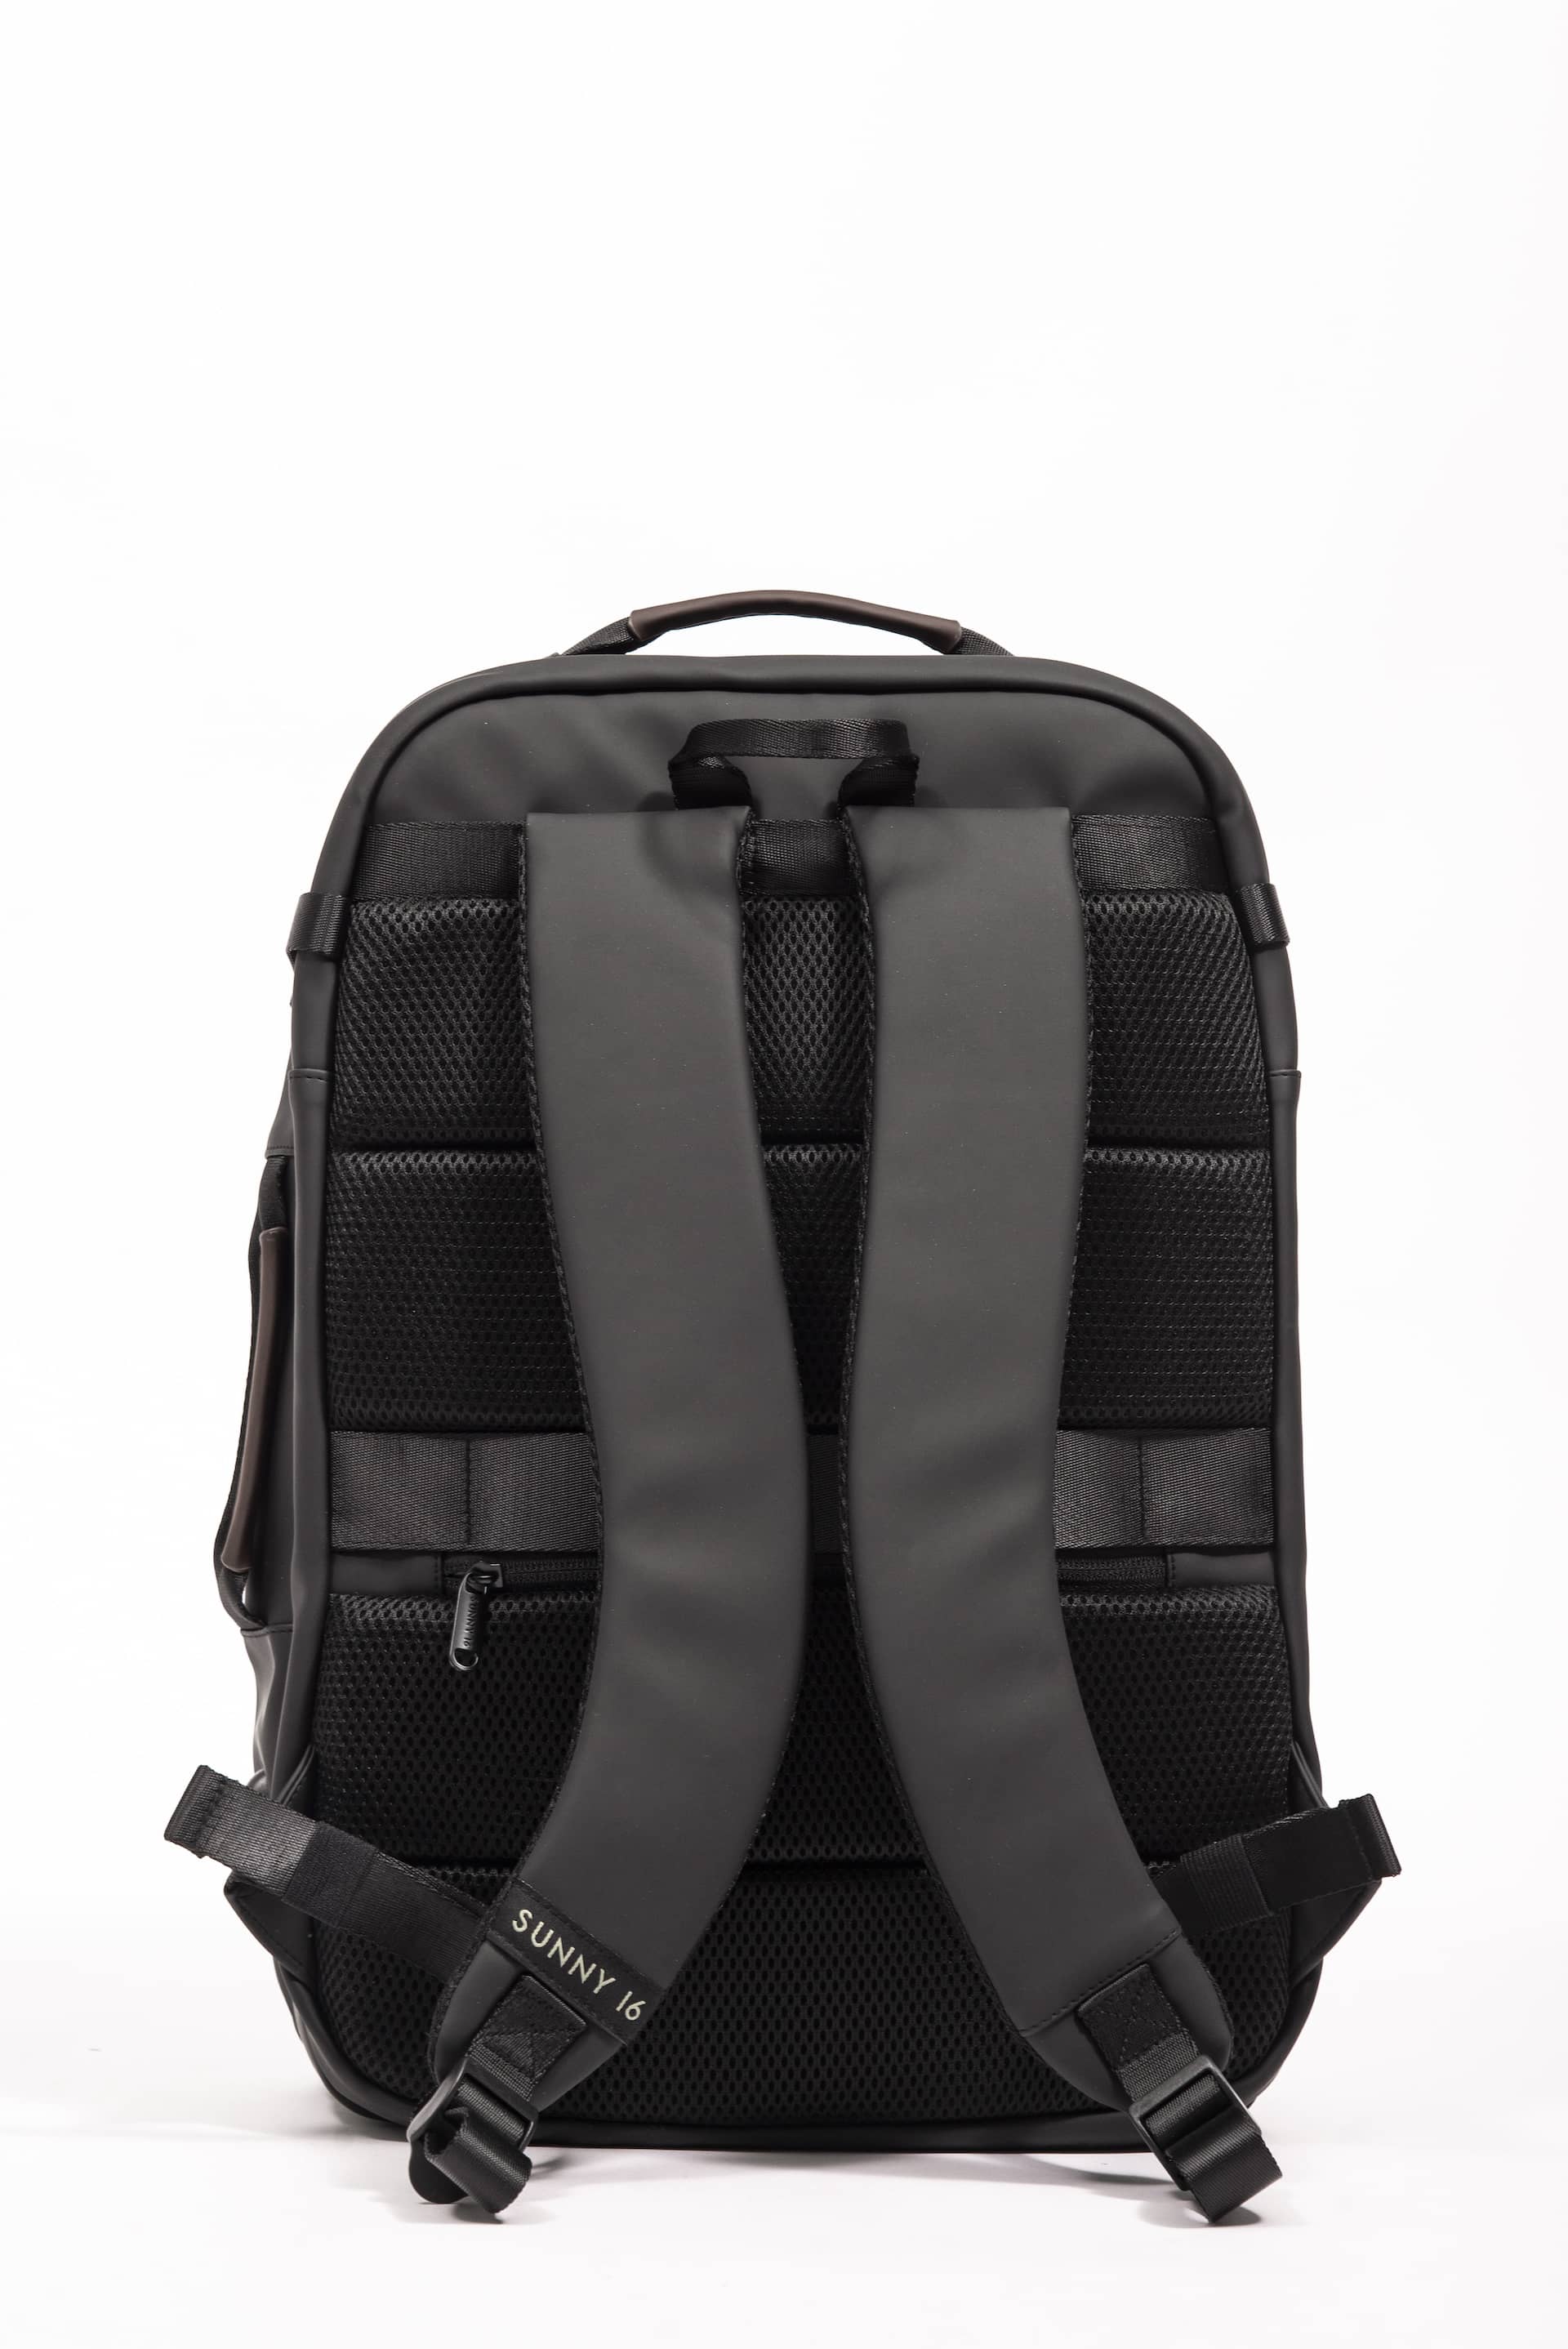 Ladies Backpack for Travel - Black Travel Backpack - Sunny 16